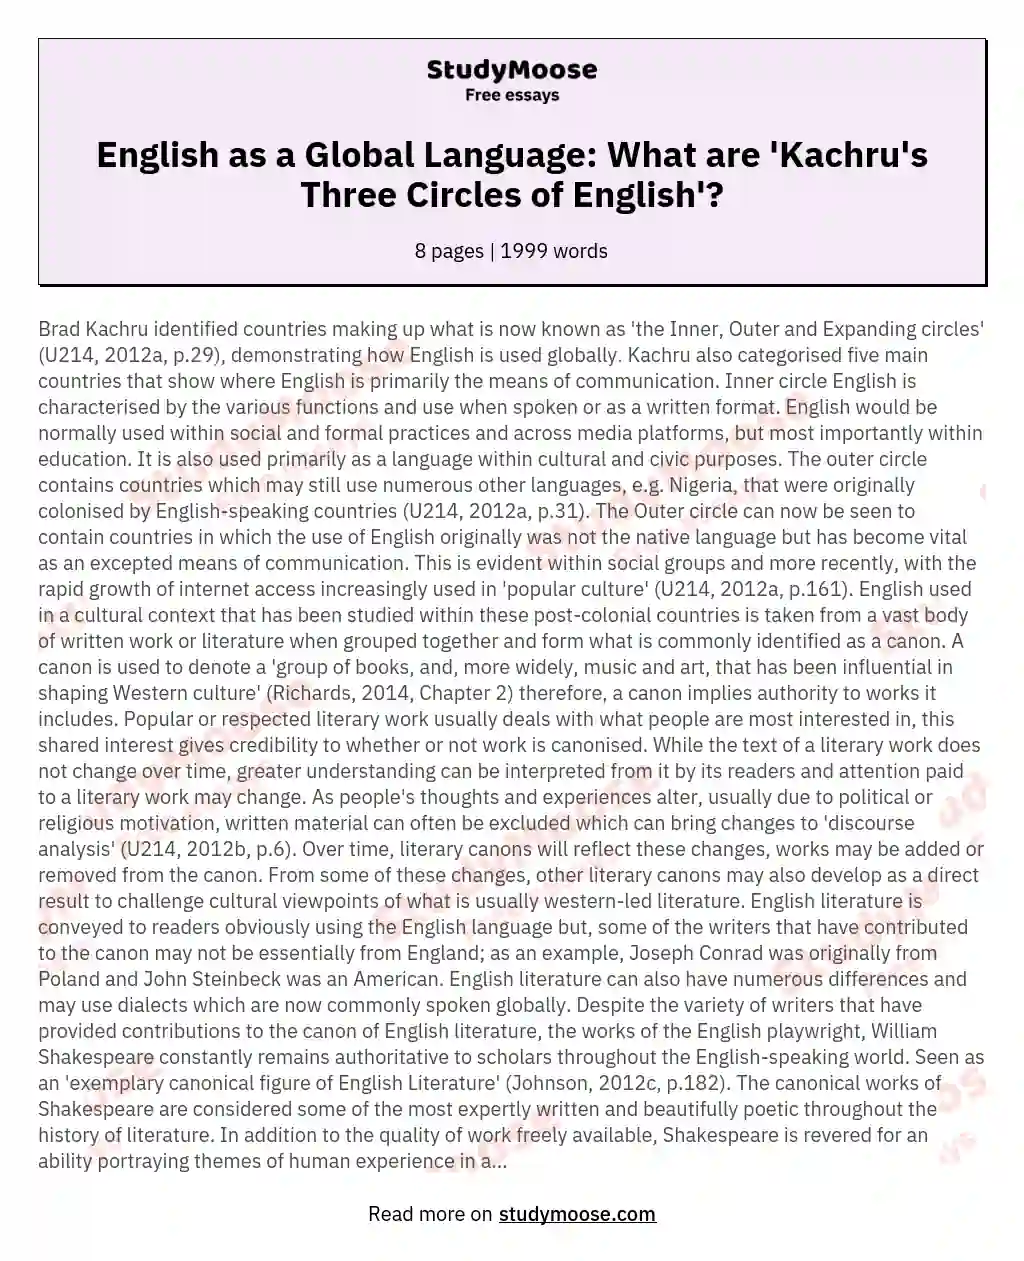 English as a Global Language: What are 'Kachru's Three Circles of English'?